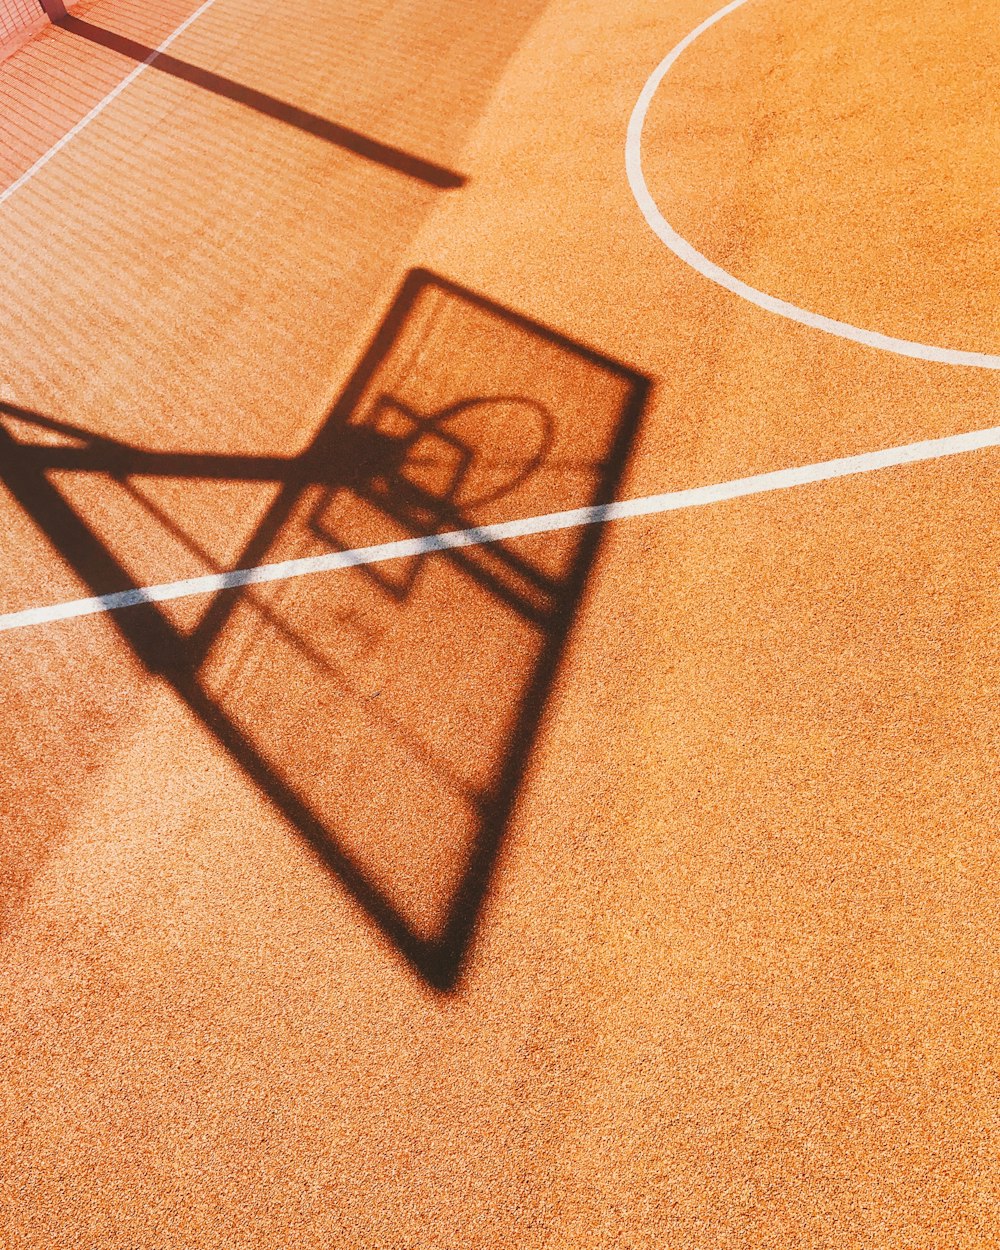 shadow of basketball hoop